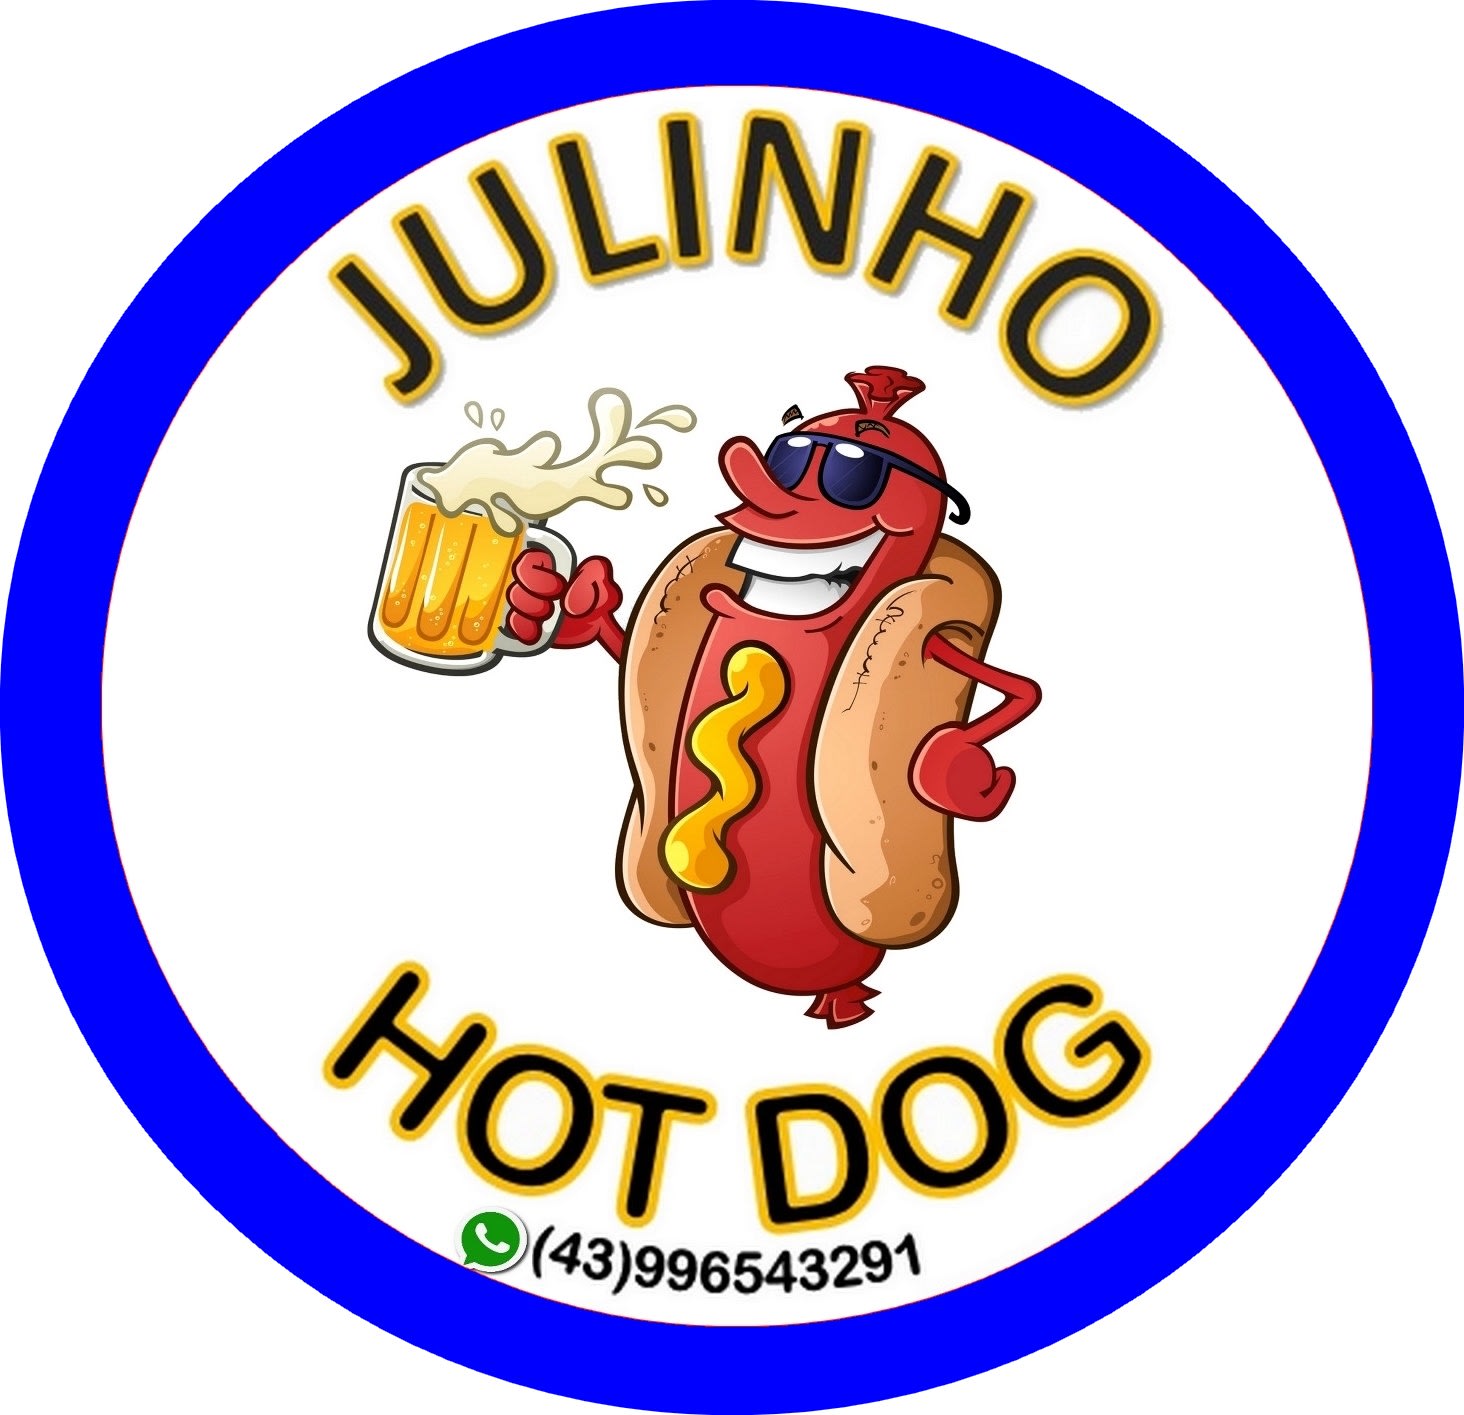 Julinho Hot Dog